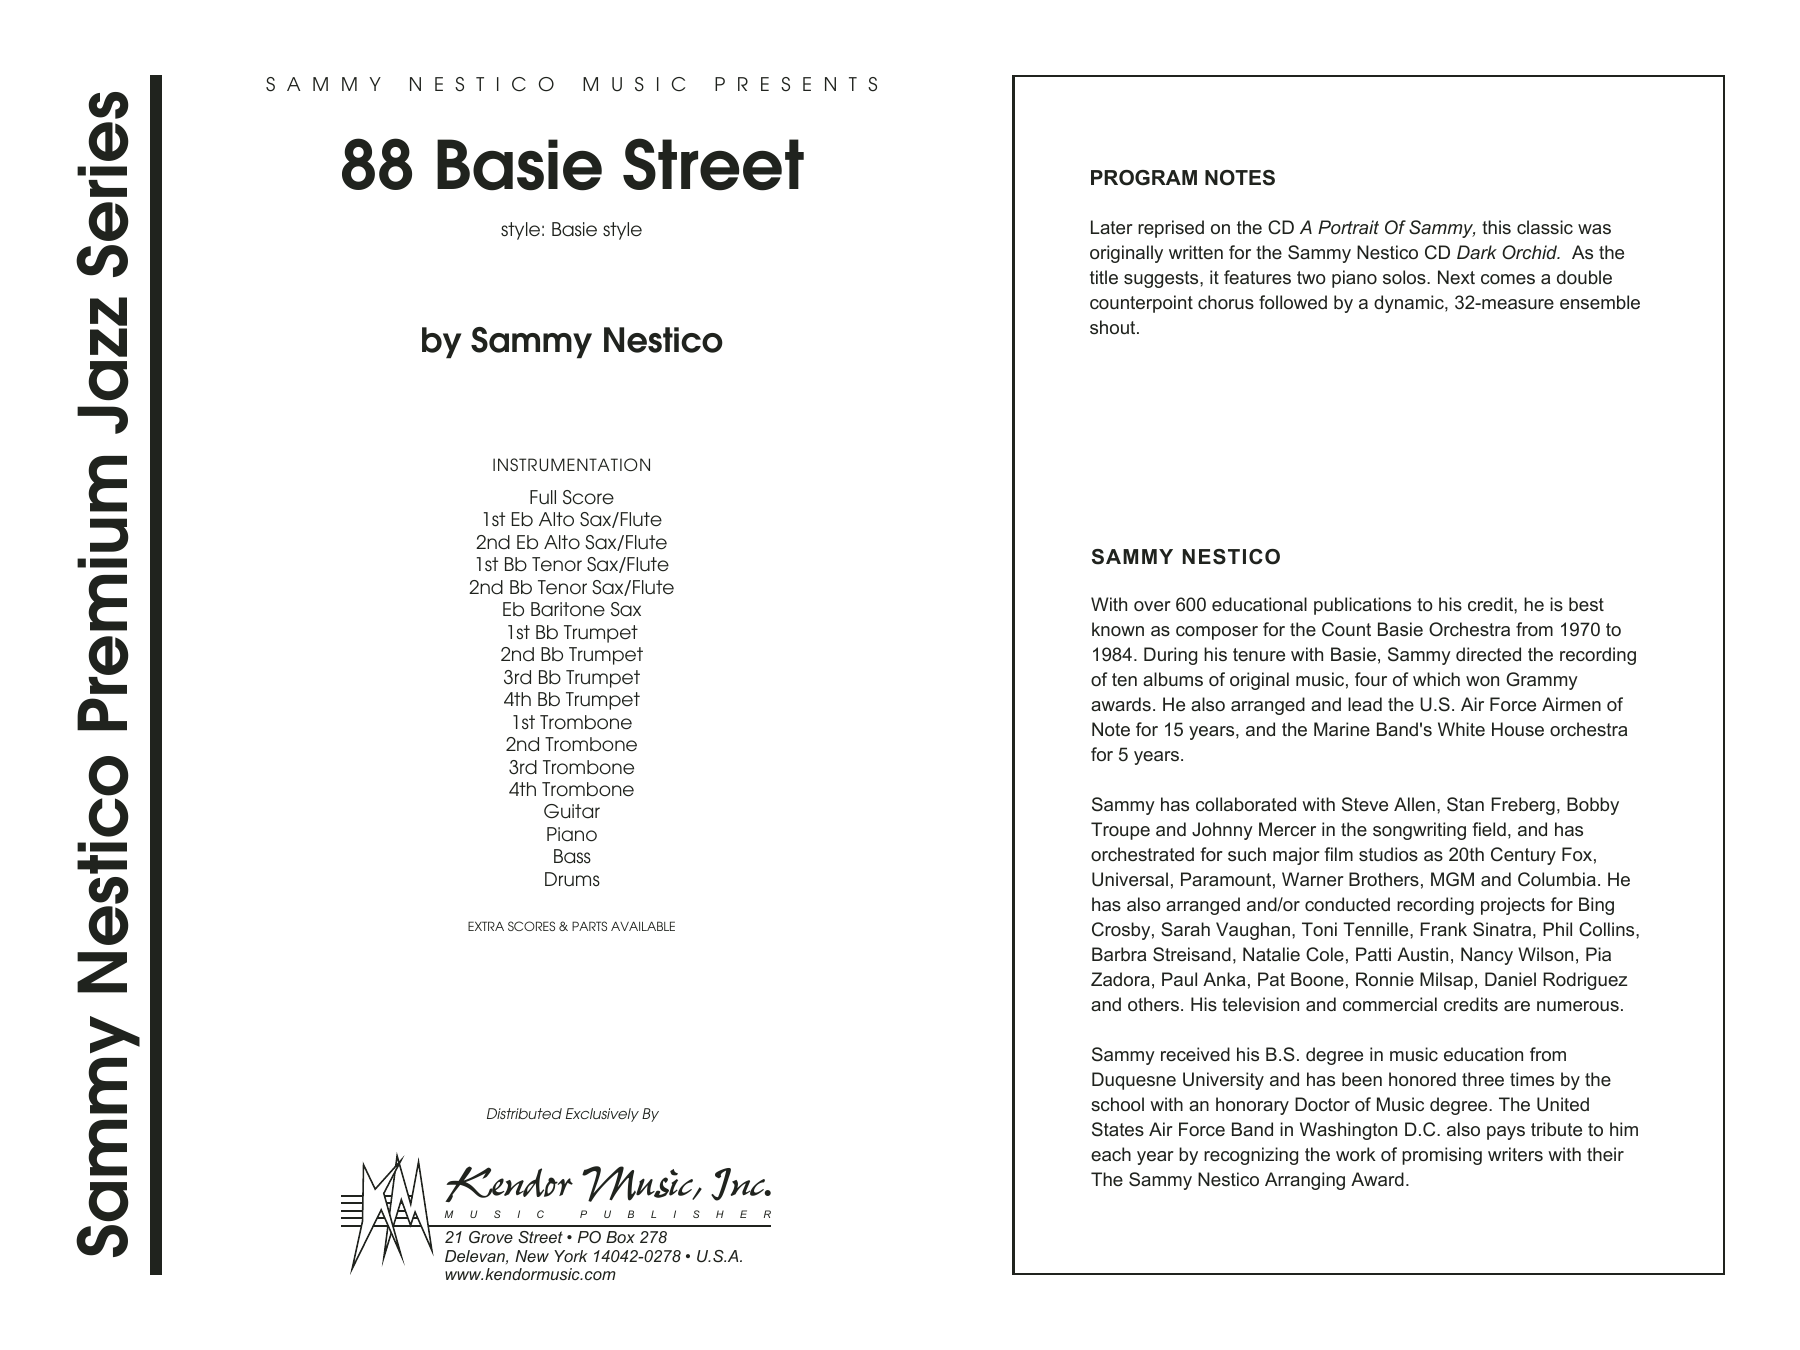 Download Sammy Nestico 88 Basie Street - Full Score Sheet Music